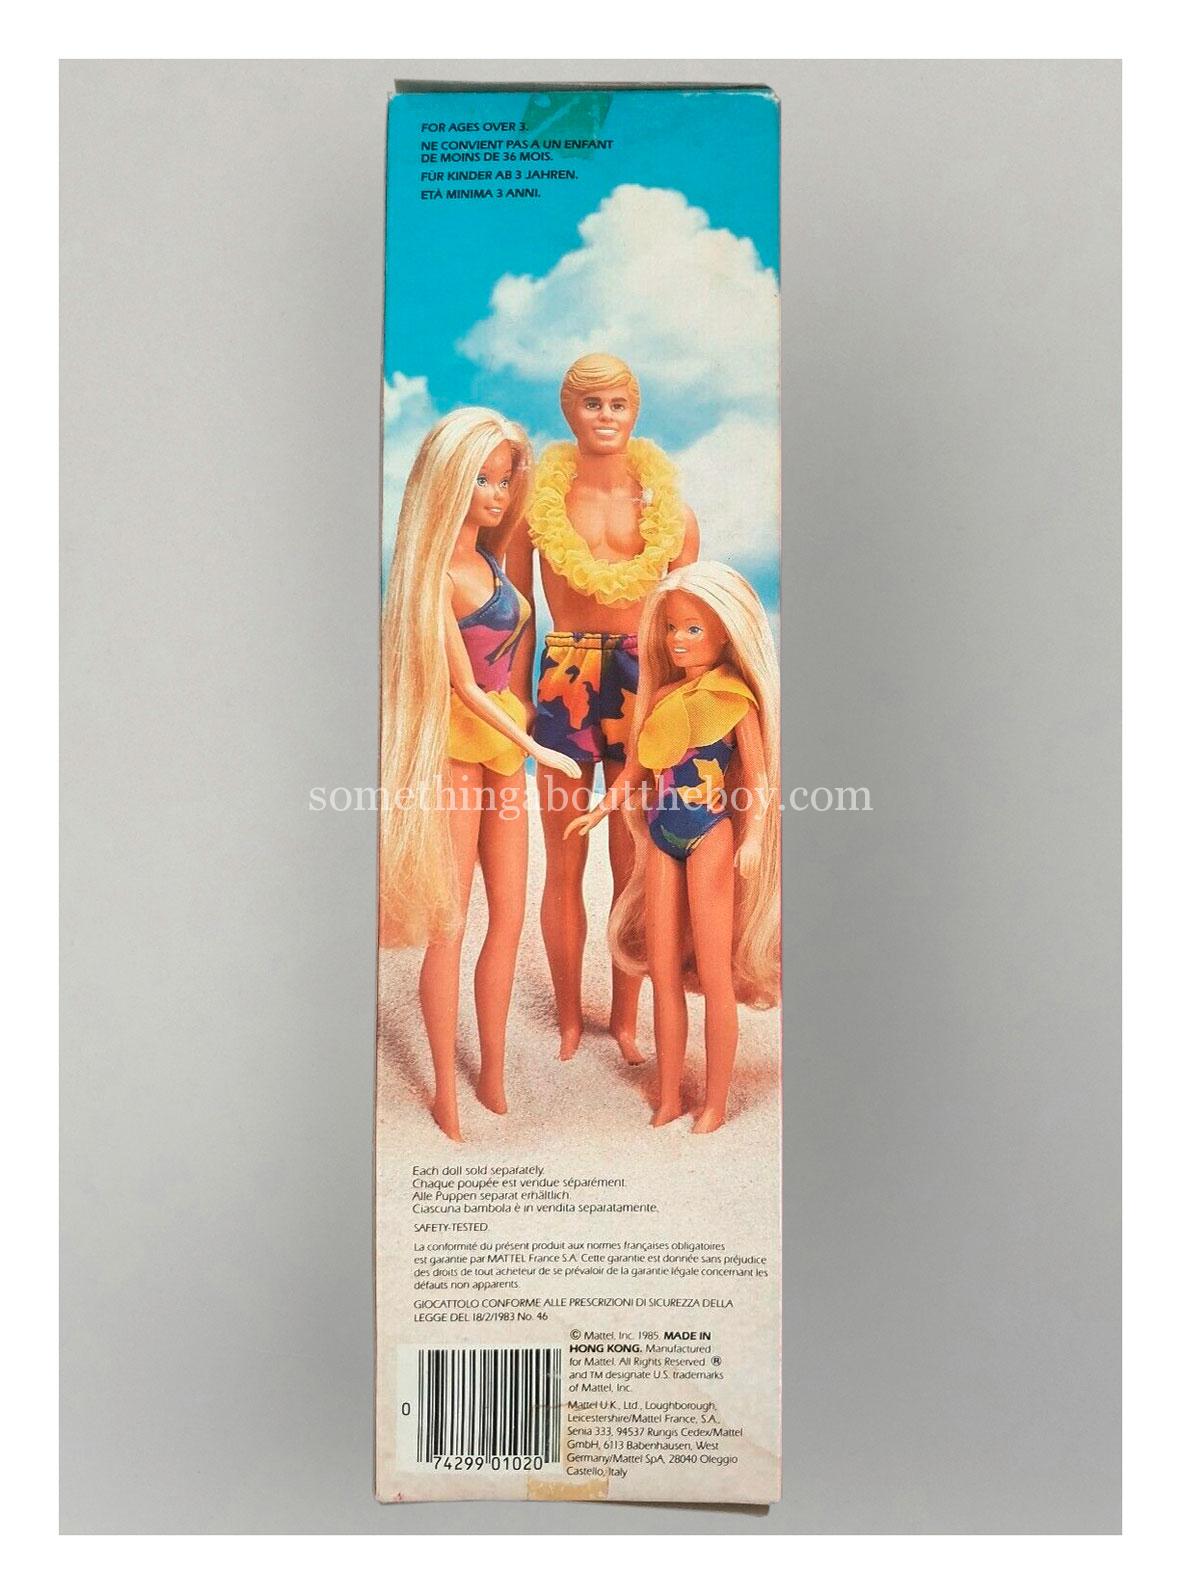 1986 #1020 Tropical Ken (European packaging) made in Hong Kong